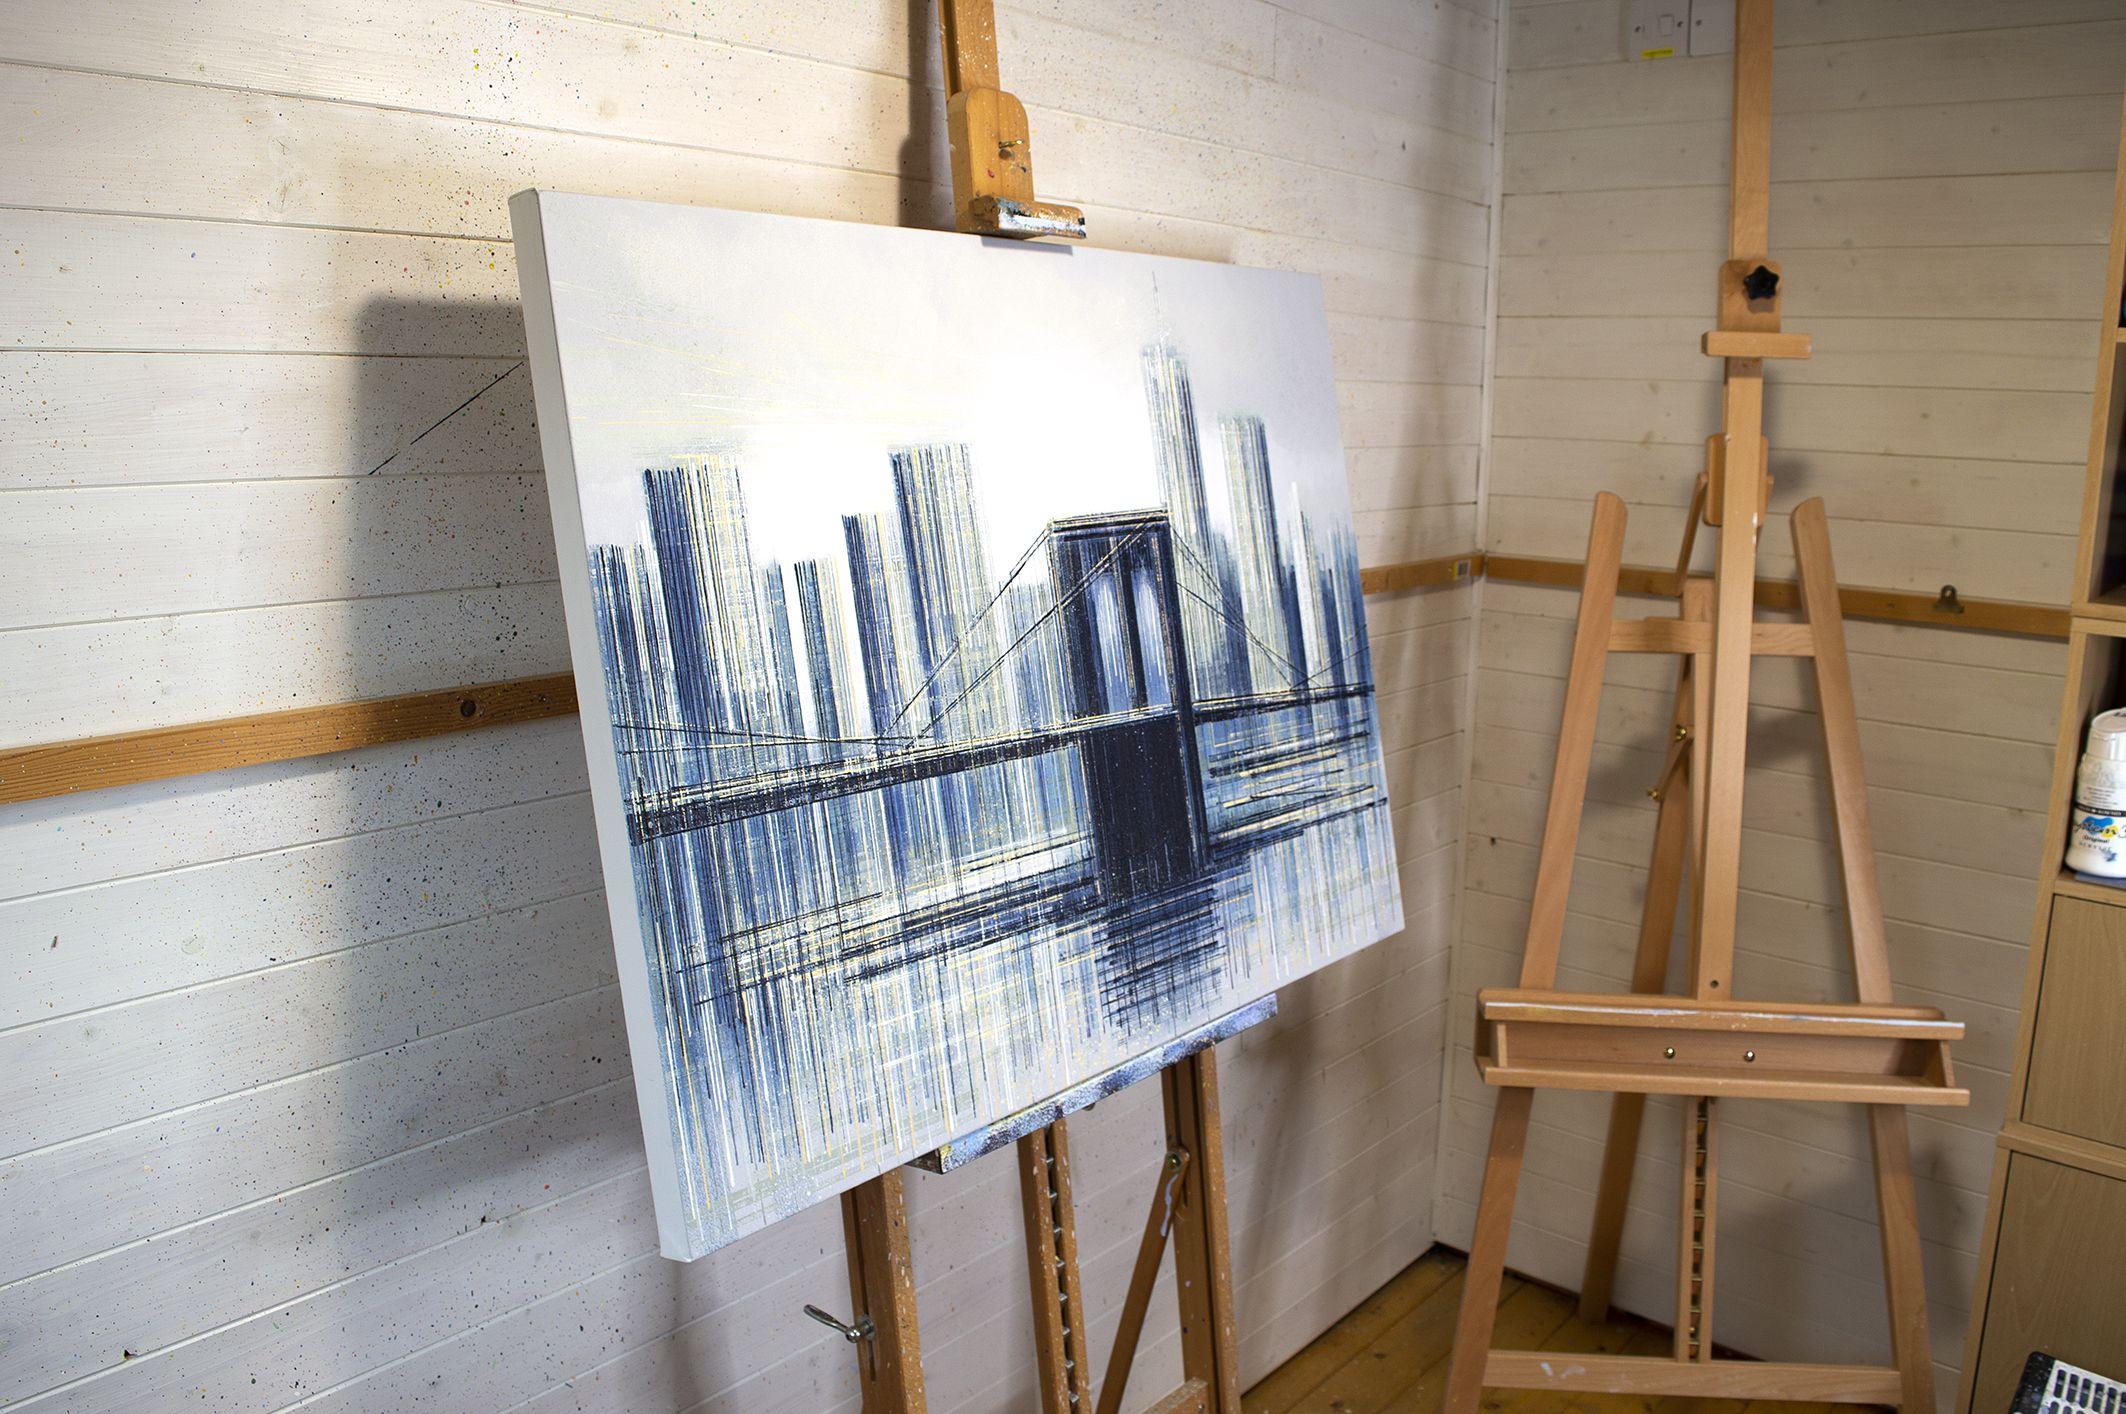 New York City - The Brooklyn Bridge At Twilight, Painting, Acrylic on Canvas 4